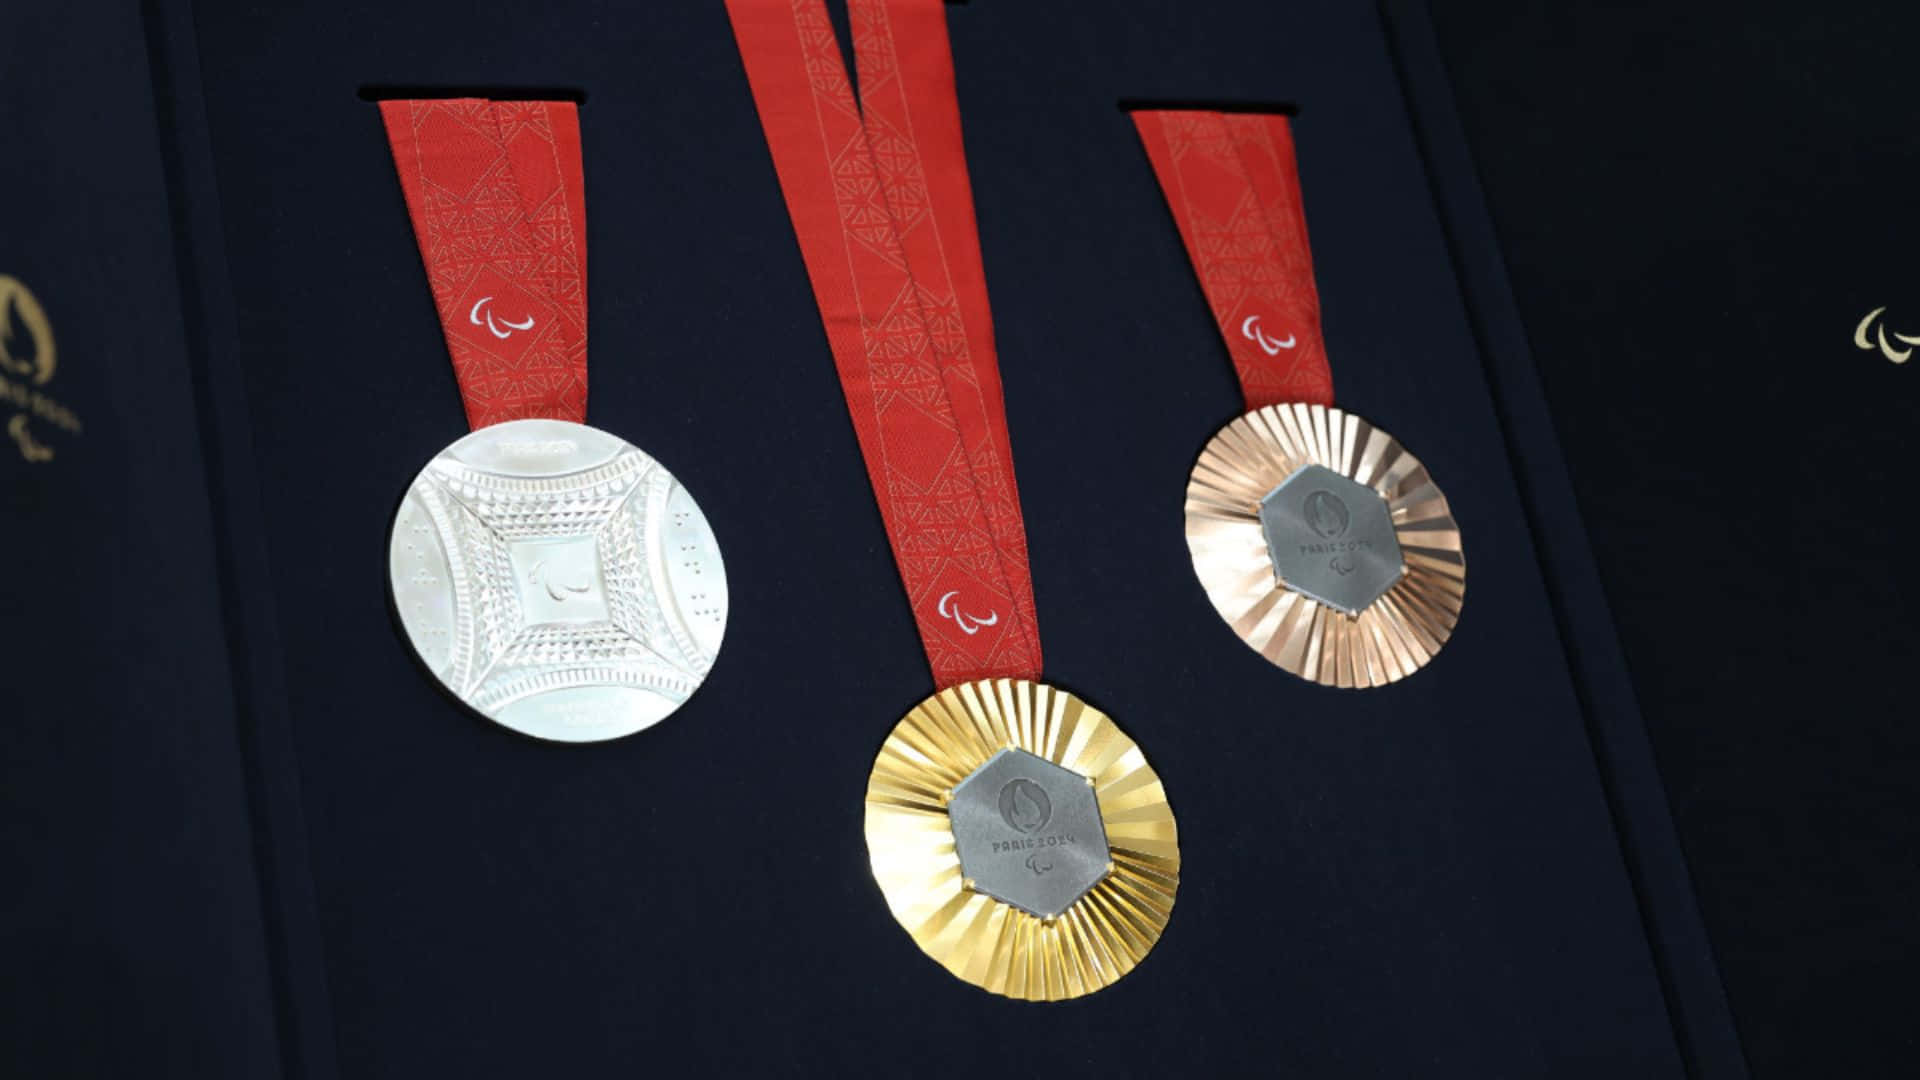 Paris2024 Olympic Medals Display Wallpaper